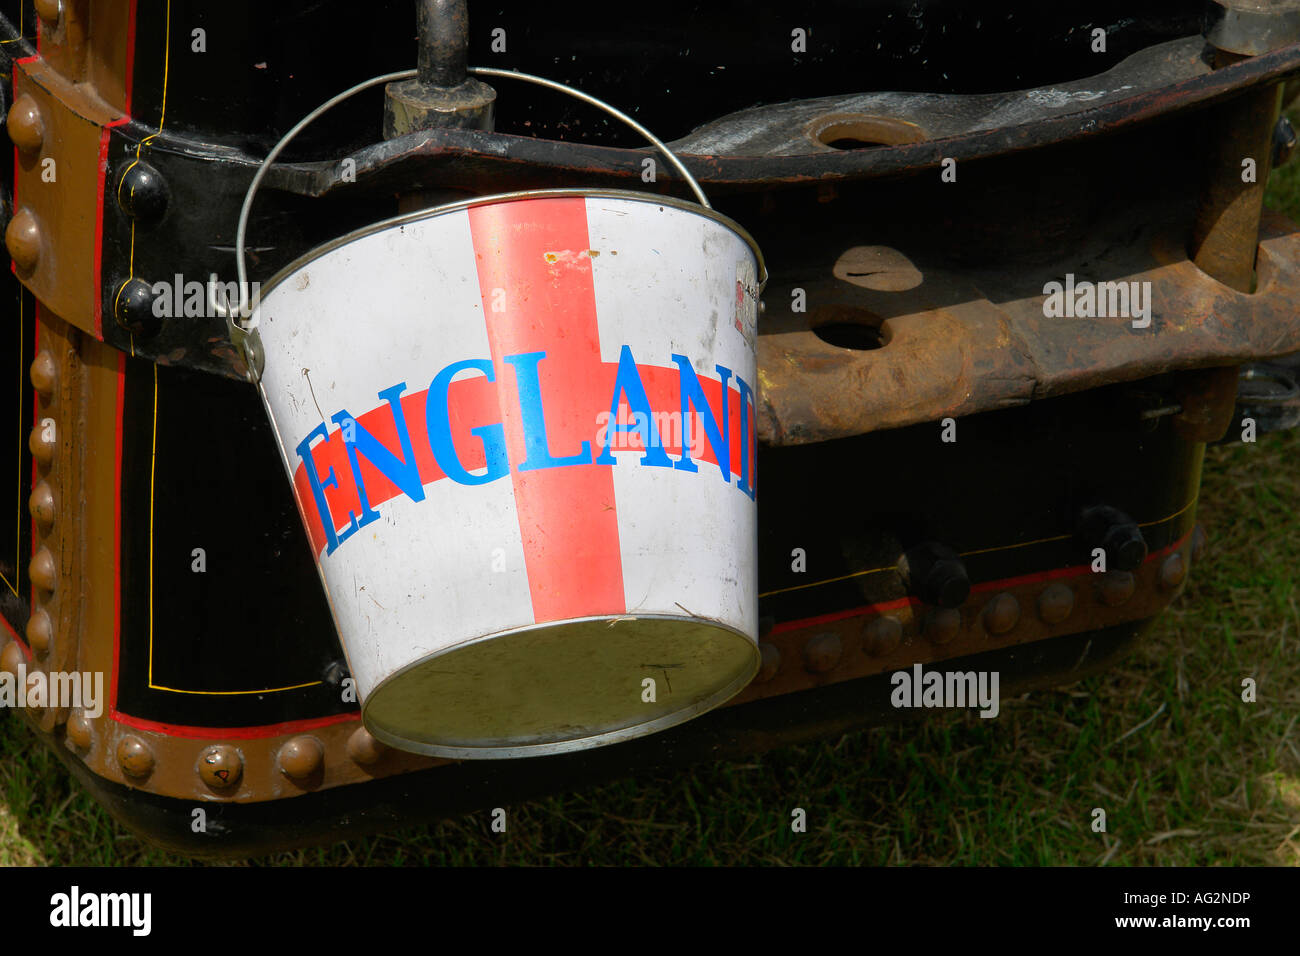 Kicking the bucket stock image. Image of bucket, kicking - 227912859